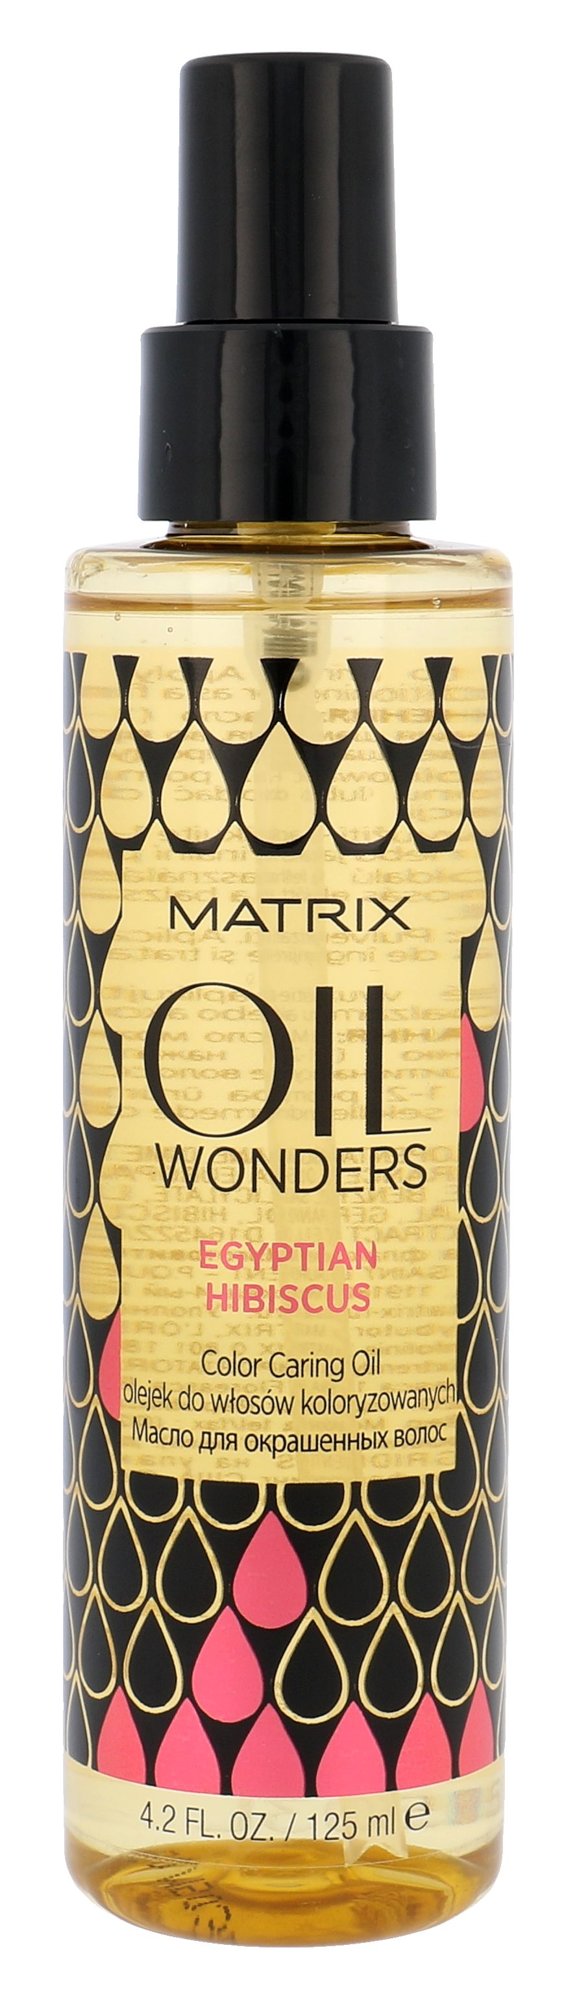 Matrix Oil Wonders Egyptian Hibiscus plaukų aliejus